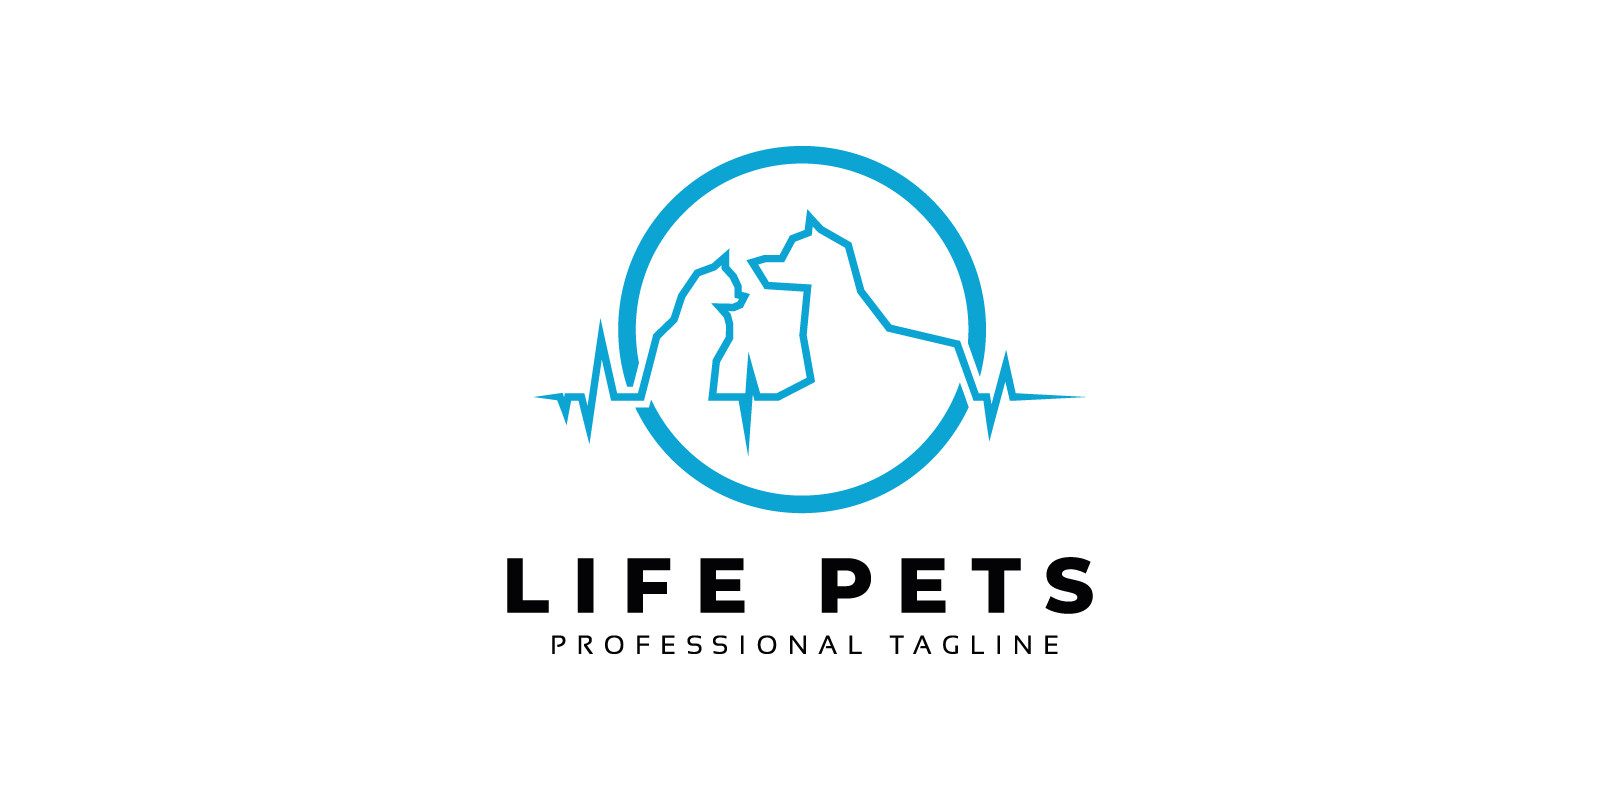 Pet life 2. Premium Pet логотип. Petlife лого. Лайф Медикал логотип. Pets Life logo.